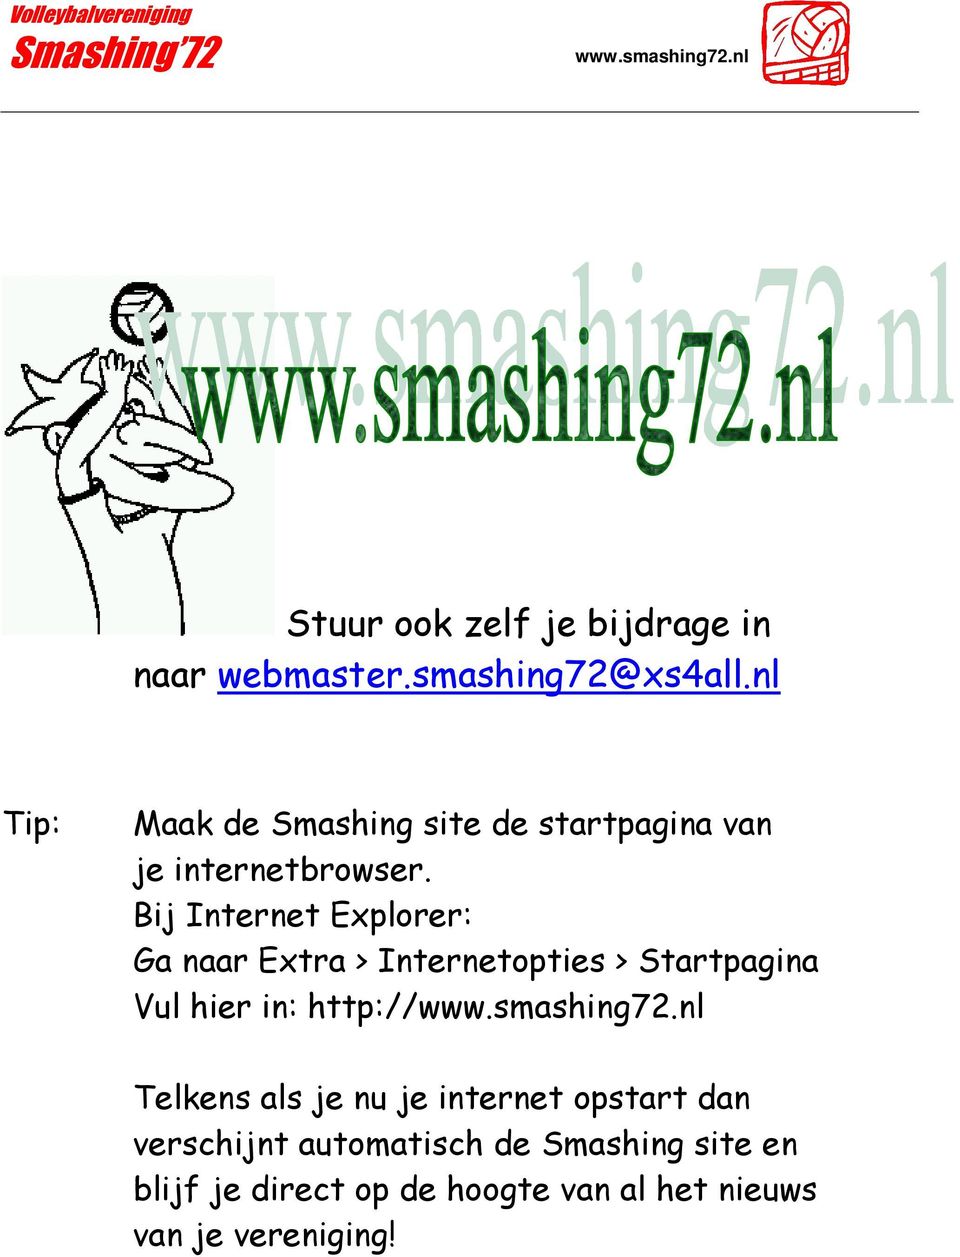 Bij Internet Explorer: Ga naar Extra > Internetopties > Startpagina Vul hier in: http://www.smashing72.